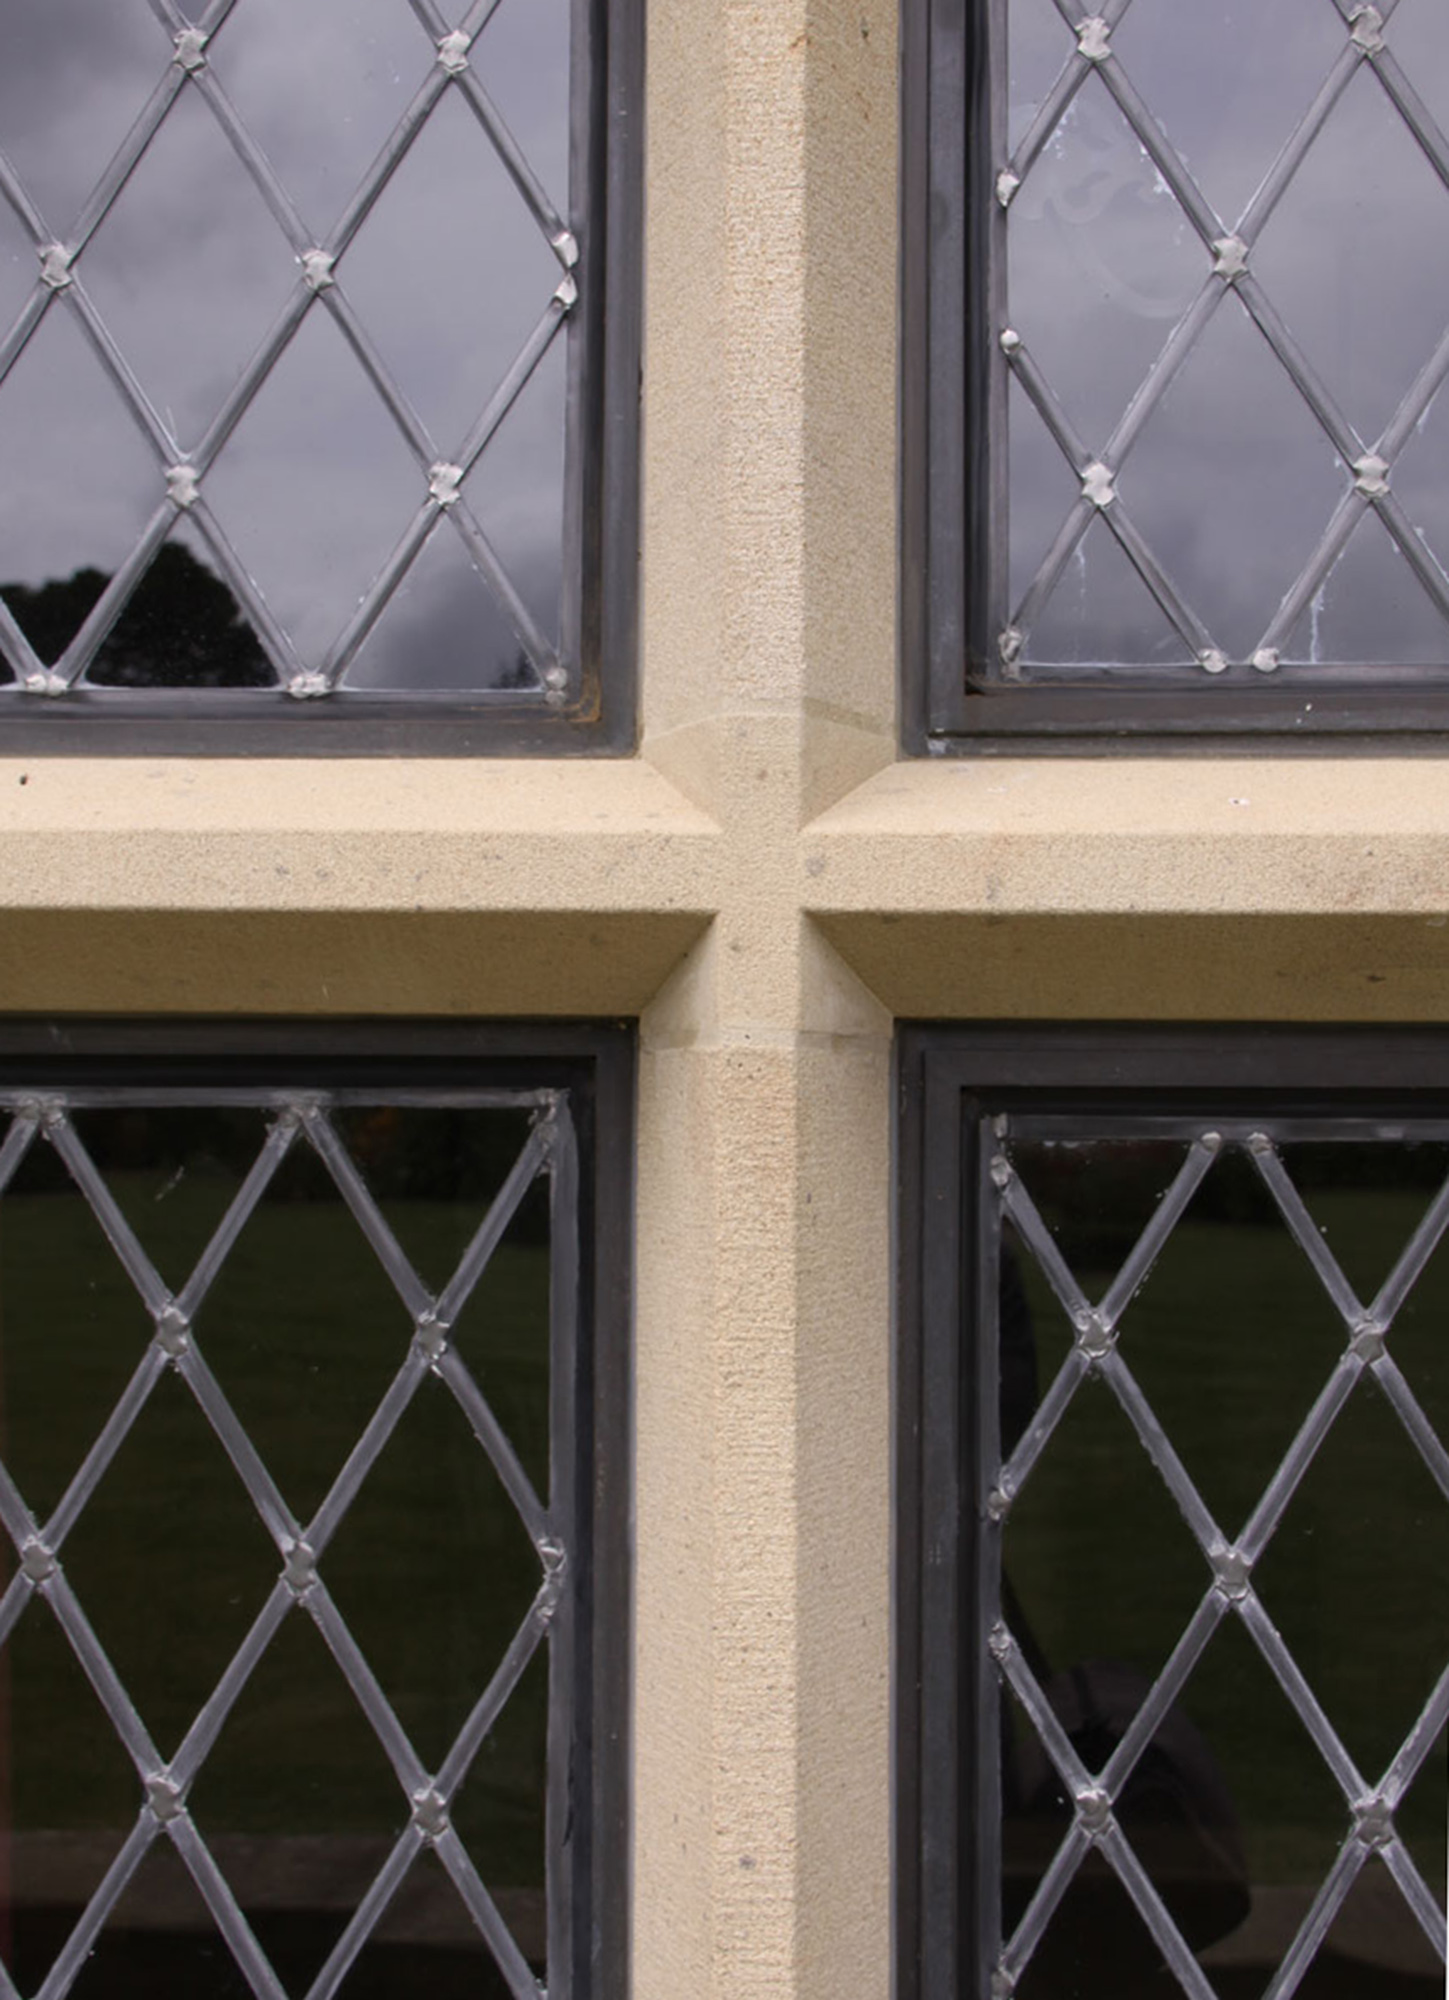 Offerton Hall - Hathersage -  Window detail during construction L2